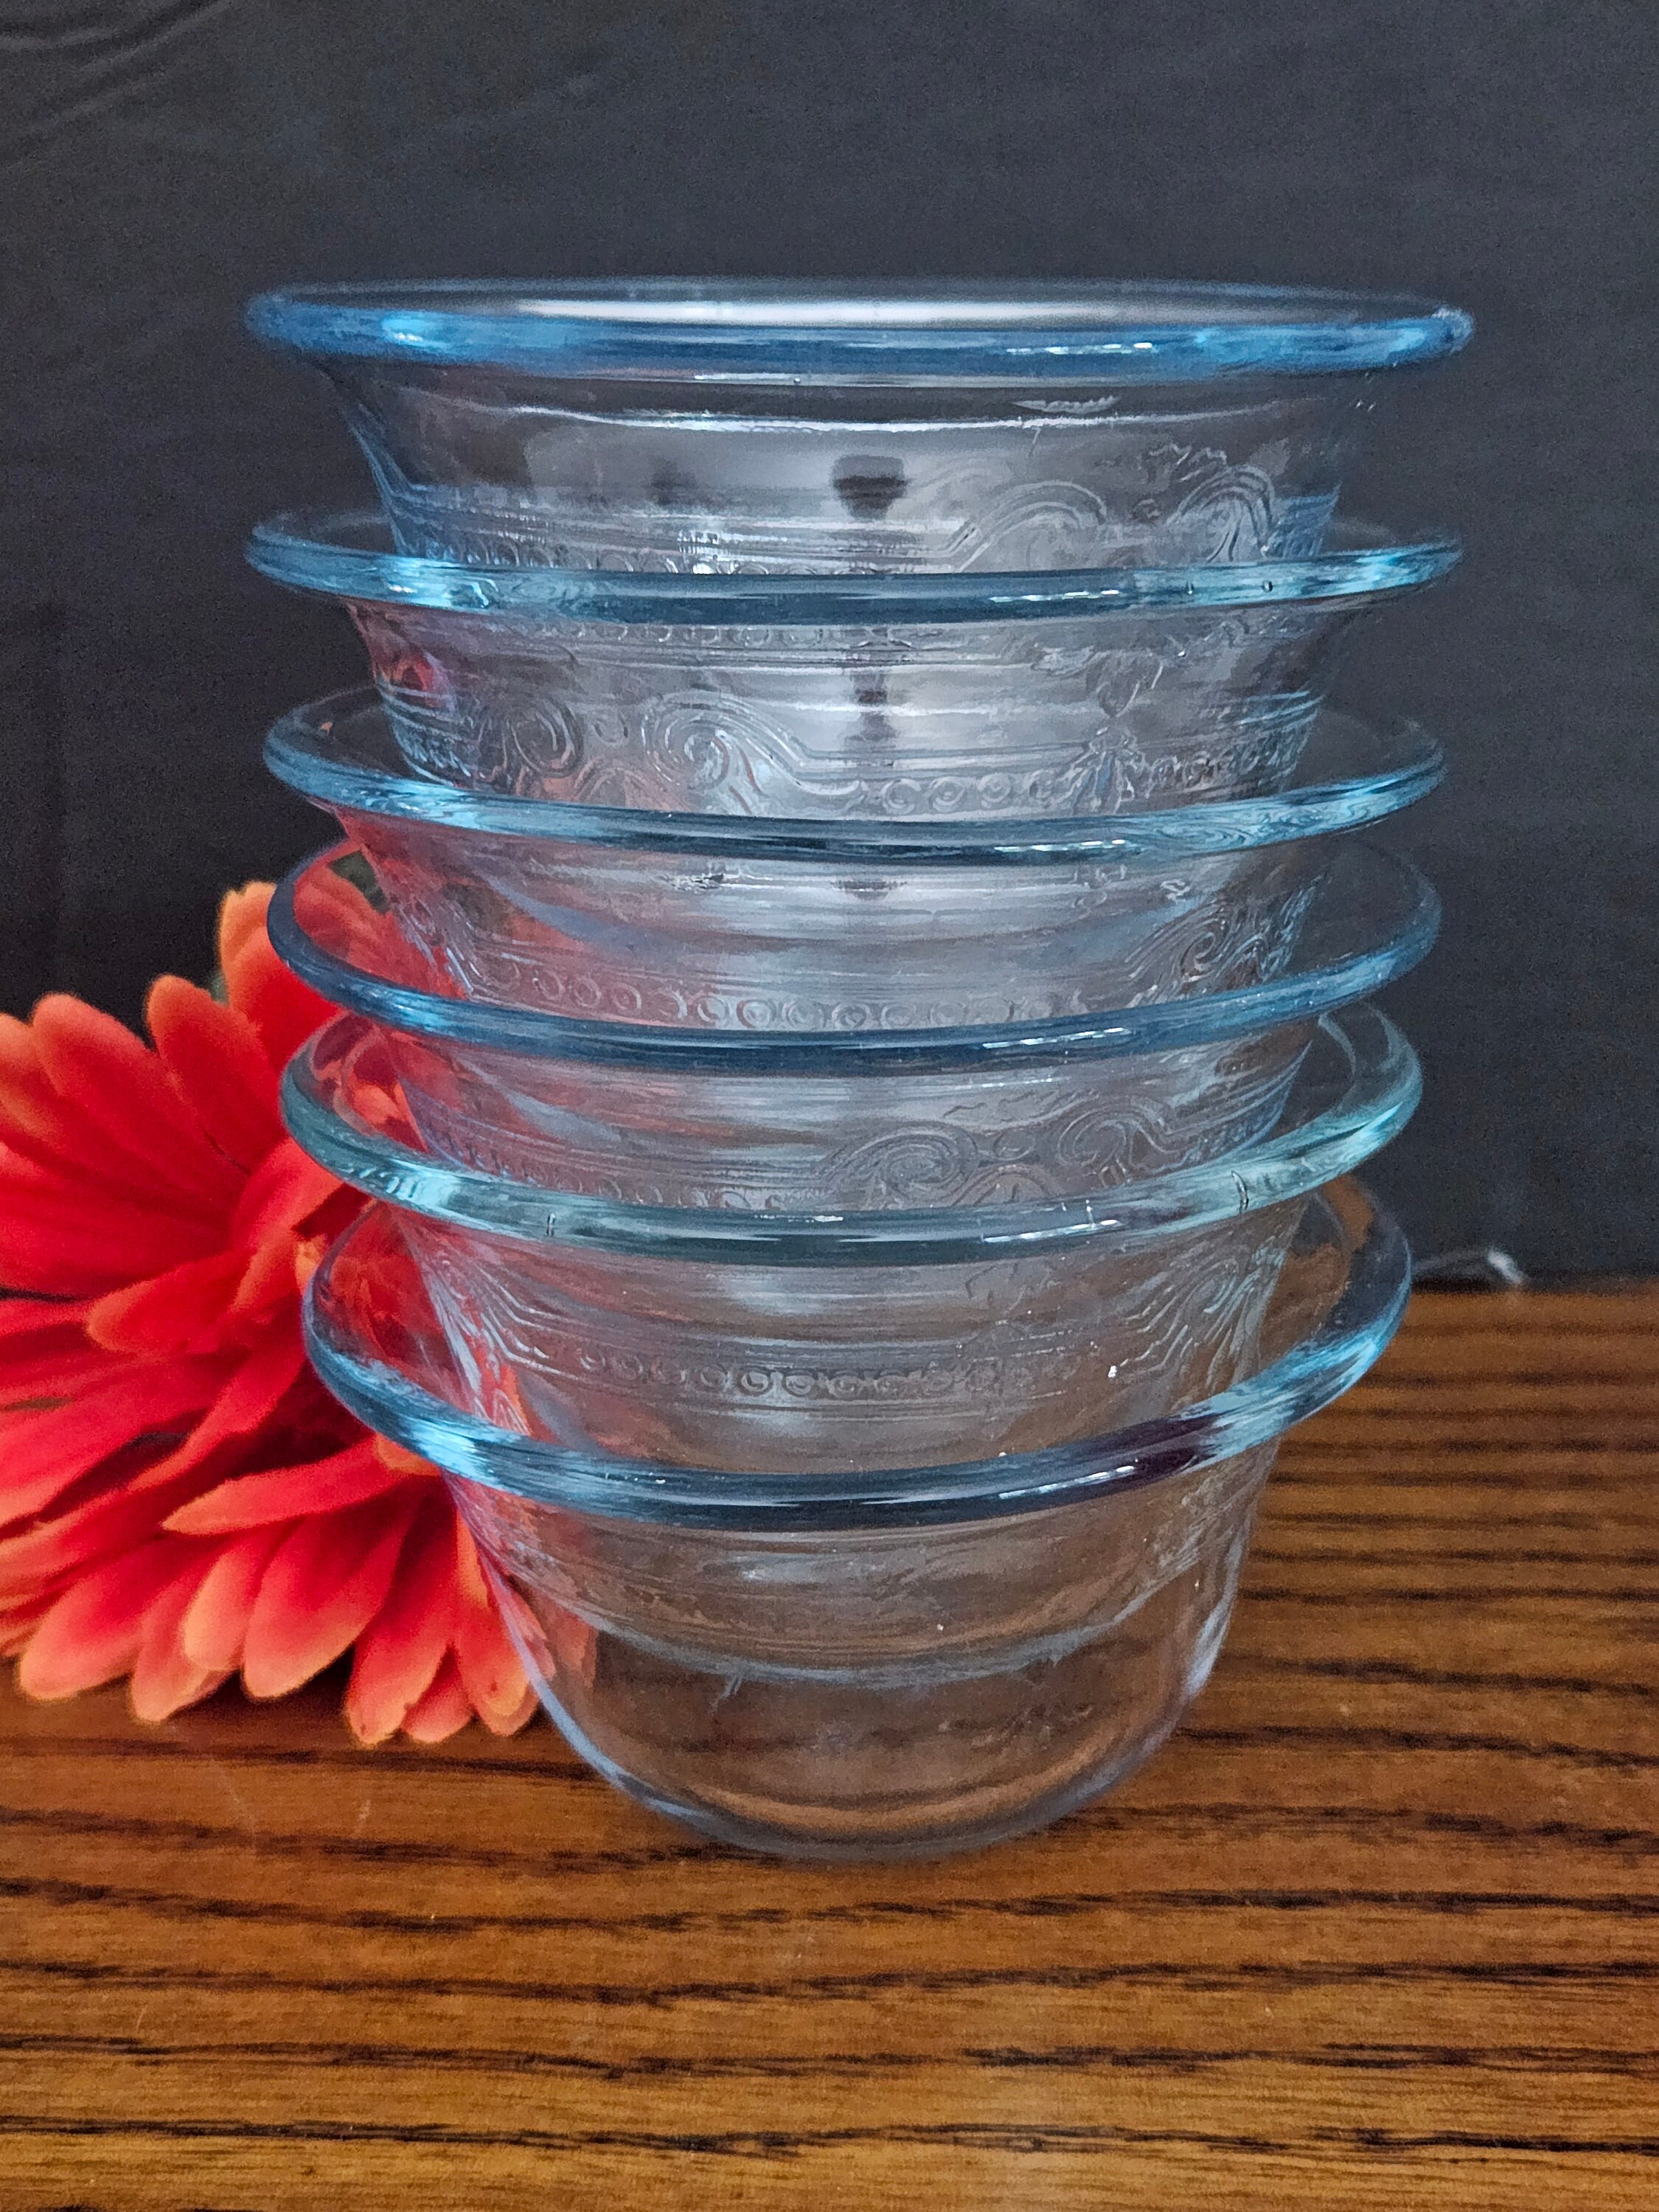 SIMAX Glass Ramekins Custard Cups - Borosilicate Glass Dessert Cups Glass -  Custard Cups for Baking - Dipping Cups - Sauce Cups - Mise En Place Clear Glass  Bowls - 6.75 Oz Condiment Bowls - Set of 4 